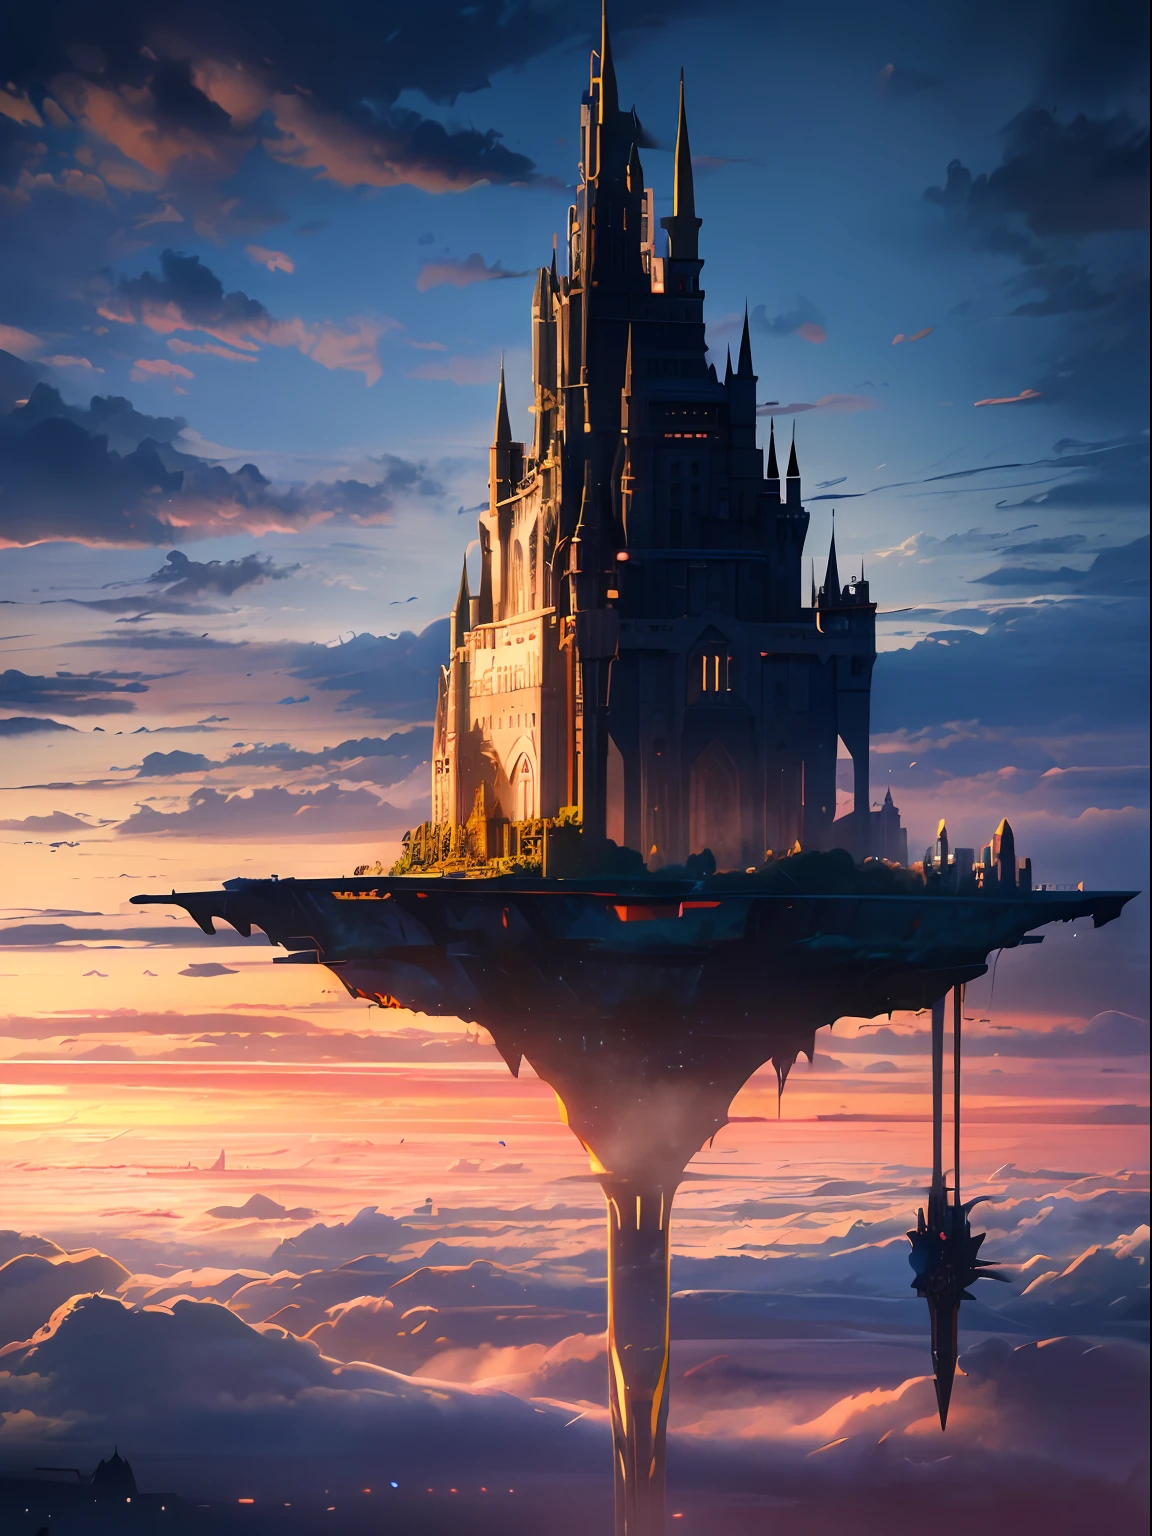 "there's an island floating in the sky among the 雲 with cyberpunk style castle on it, 城堡裡充滿了齒輪和機械零件" 天空之城, 漂浮城堡, 雲, (電影般的, 8K, 傑作, 輝煌背景, 動態照明, 極高的細節, 迷人的風景)